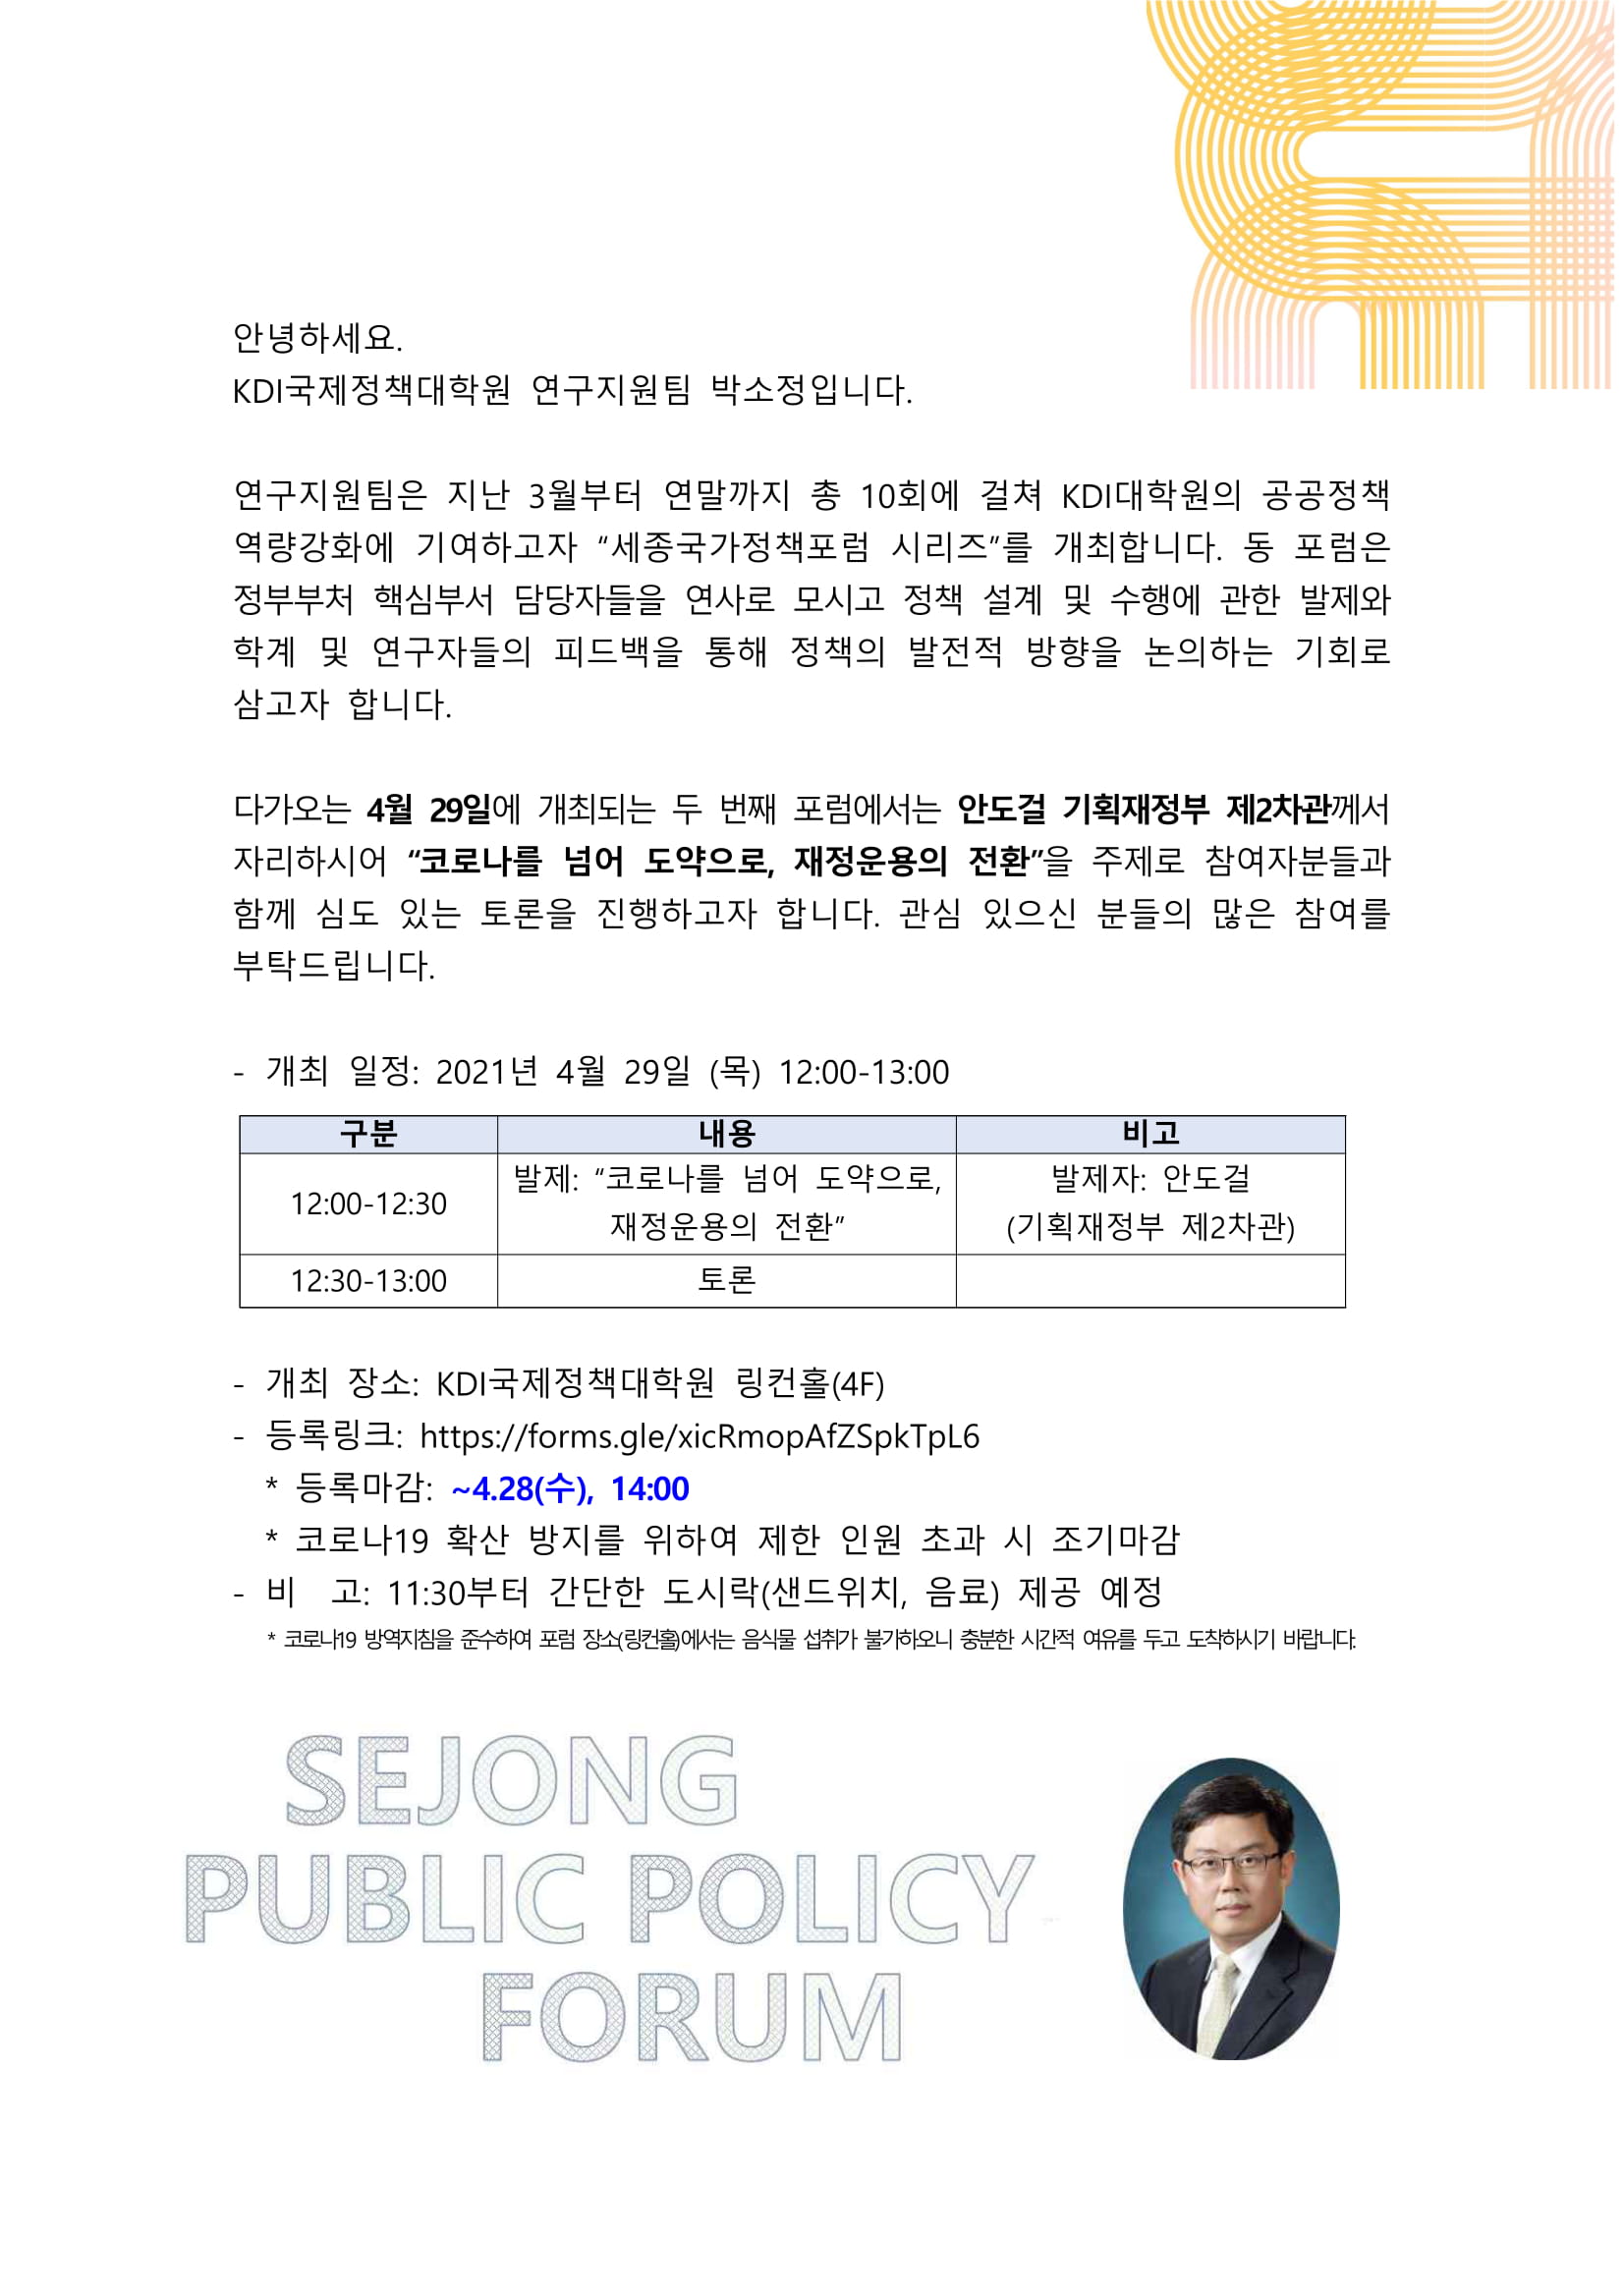 [Invitation] 제2회 세종국가정책포럼 개최 안내 (4월29일(목) 오후12시)